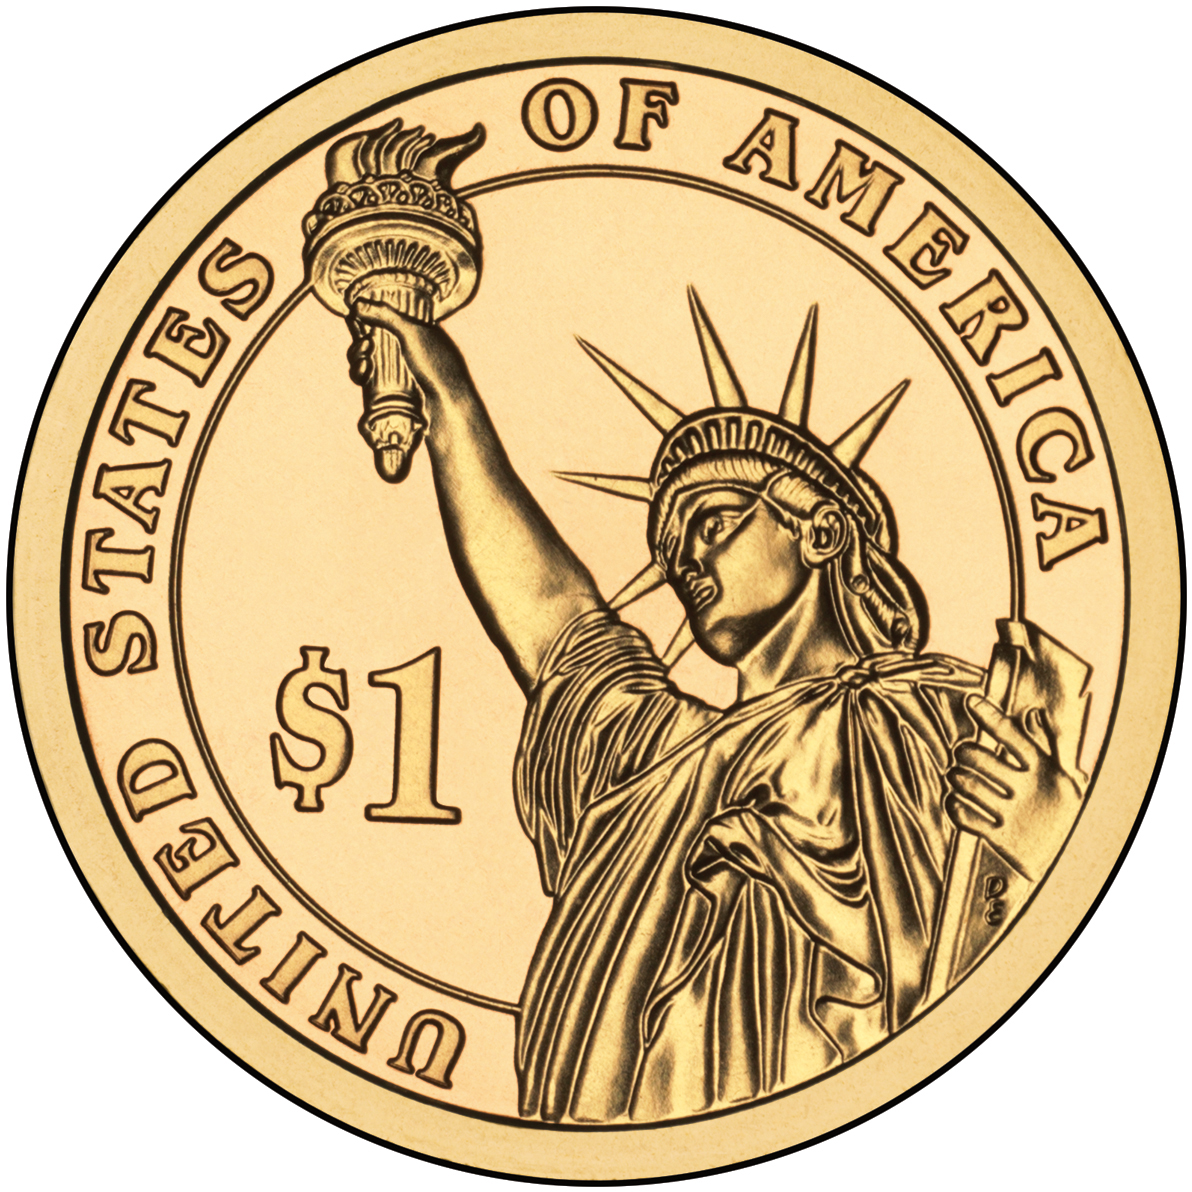 James Garfield Presidential $1 Coin | U.S. Mint